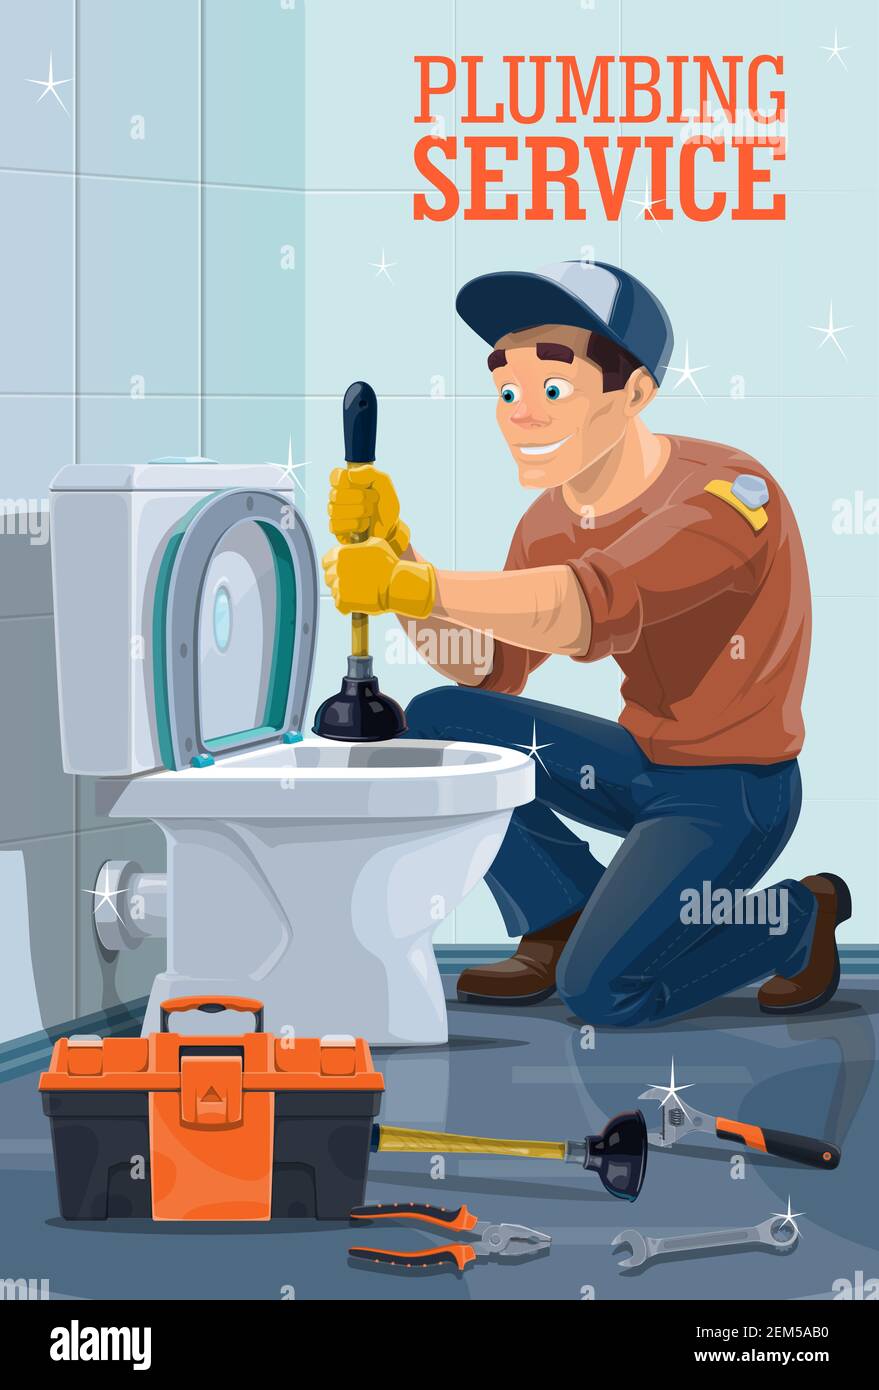 Plumbing Service Vector Design With Plumber And Work Repair Tools